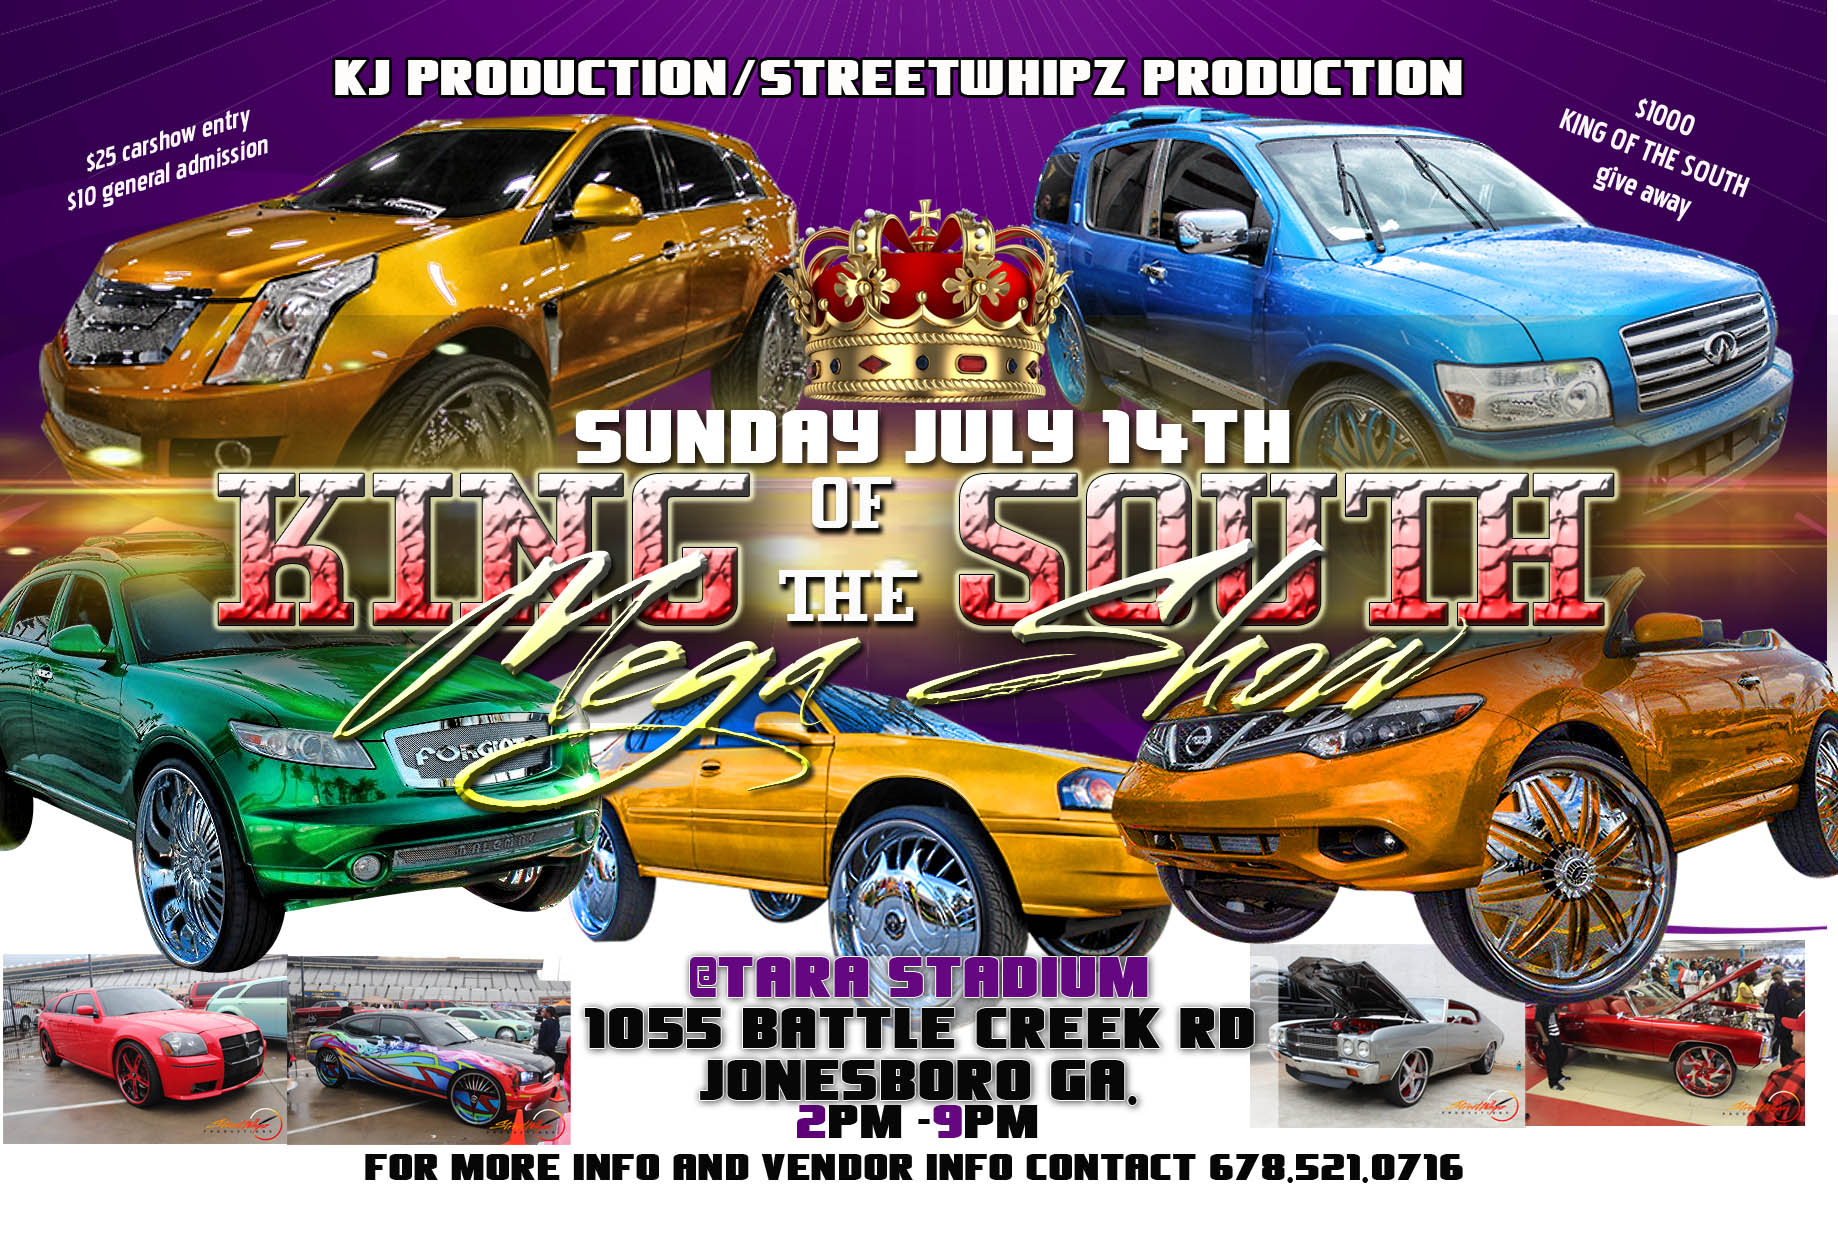 KING OF THE SOUTH CAR SHOW! JULY 14TH JONESBORO, GA.. Midwest Street